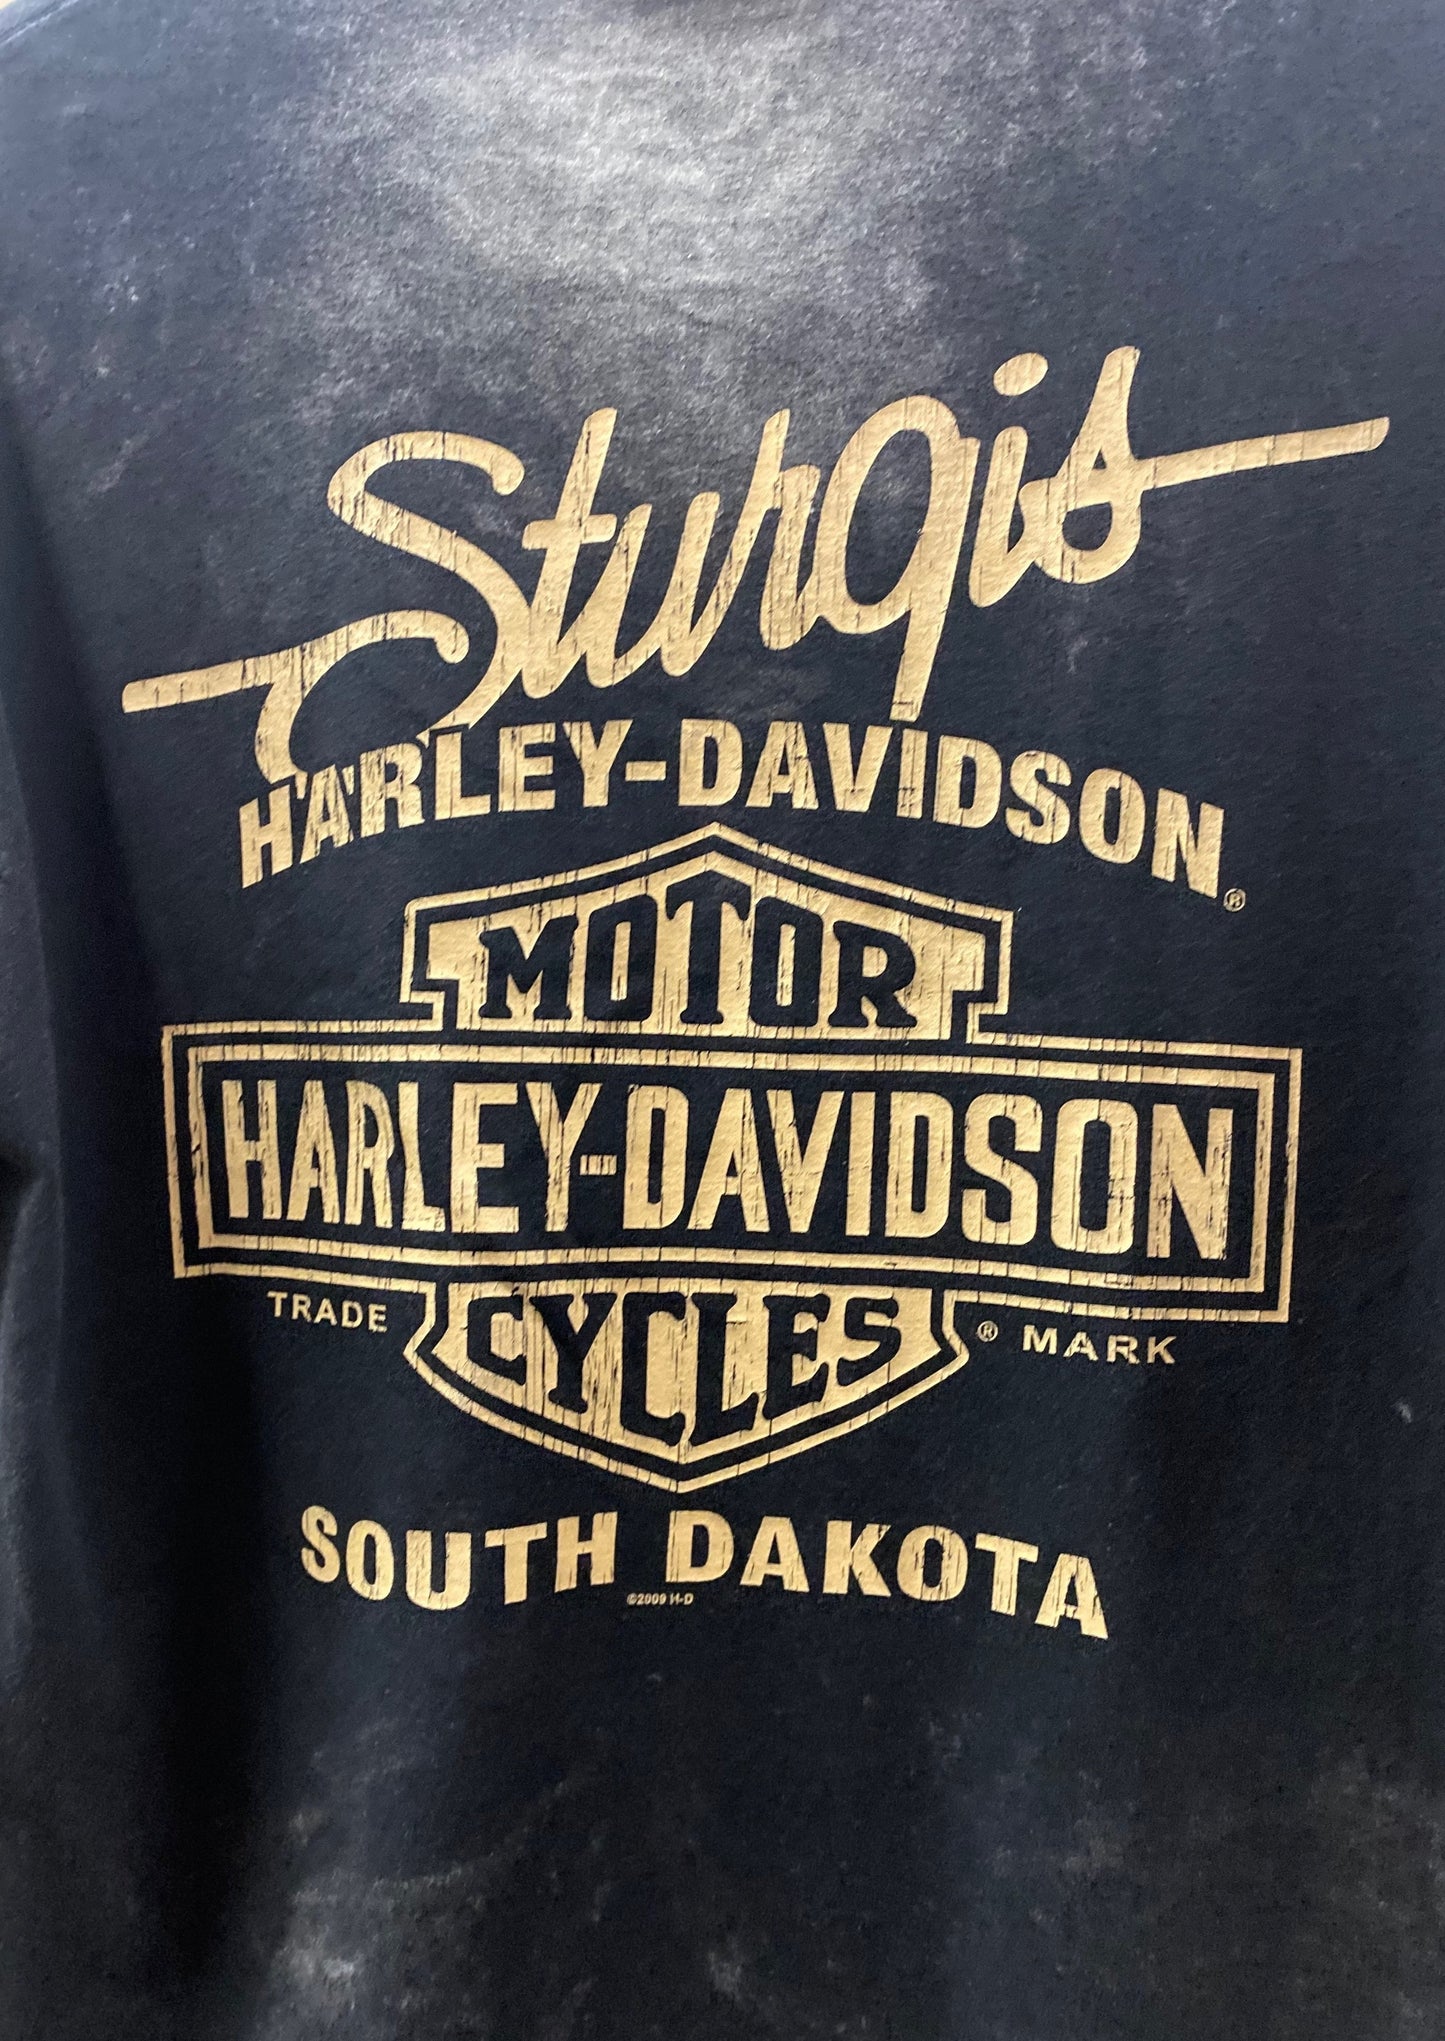 Load image into Gallery viewer, Harley Davidson Sturgis - South Dakota (4811527290960)
